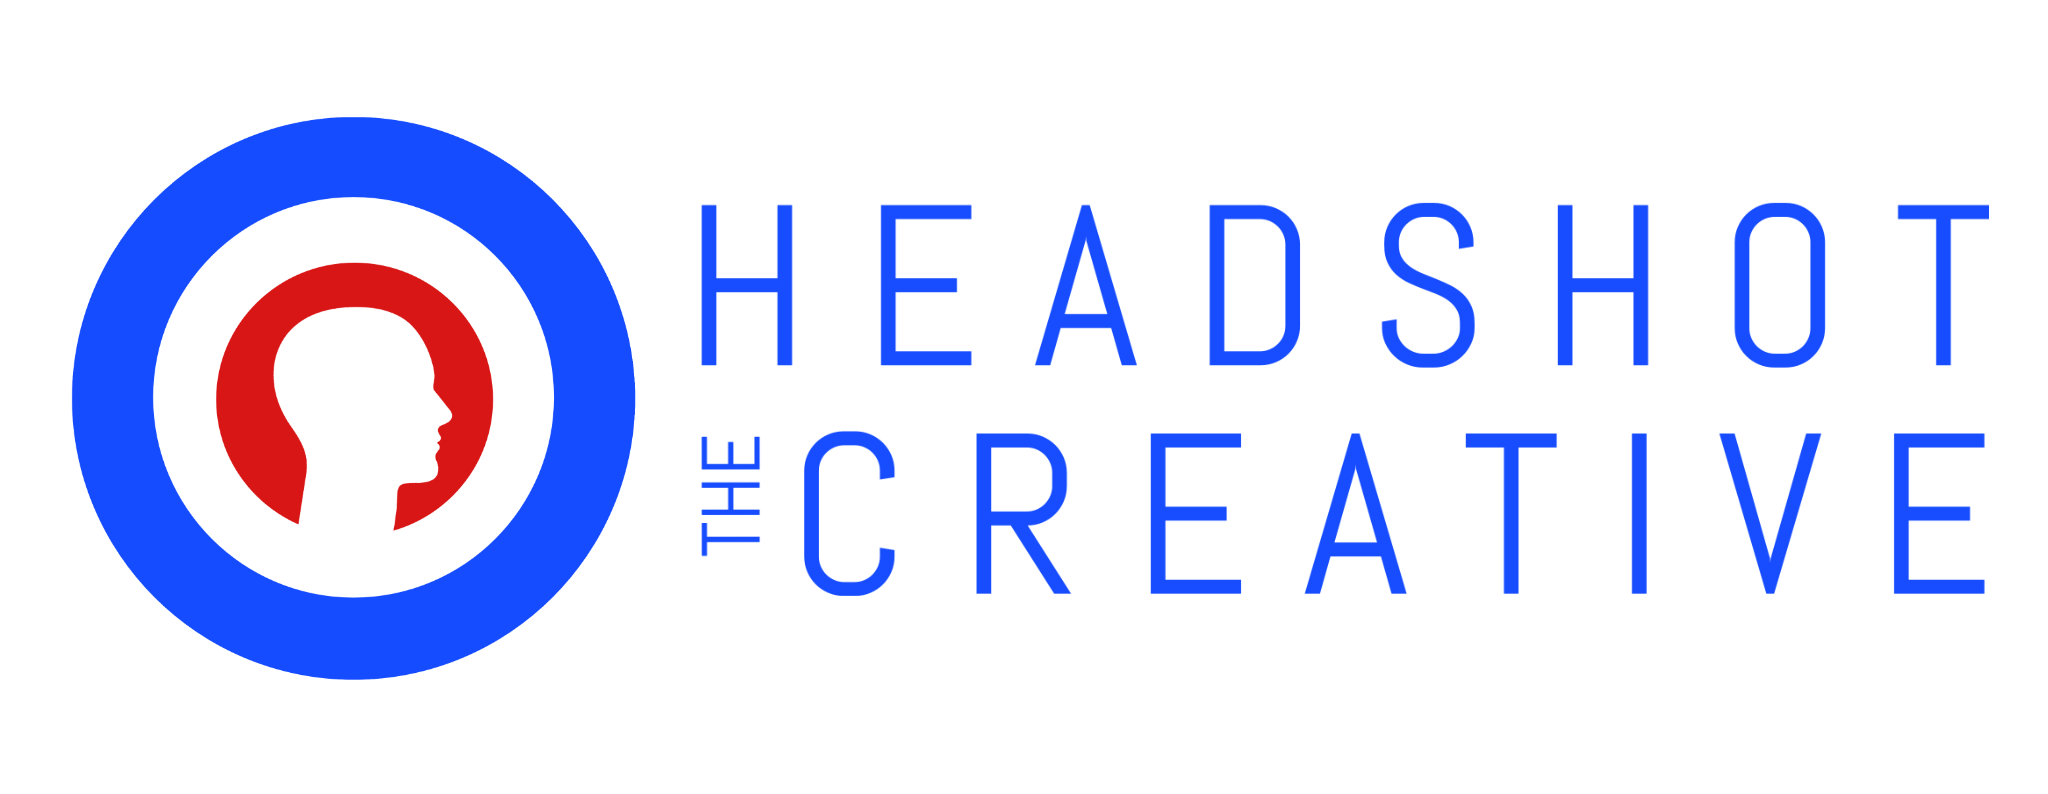 THE HEADSHOT CREATIVE, ADELAIDE HEADSHOT PHOTOGRAPHER